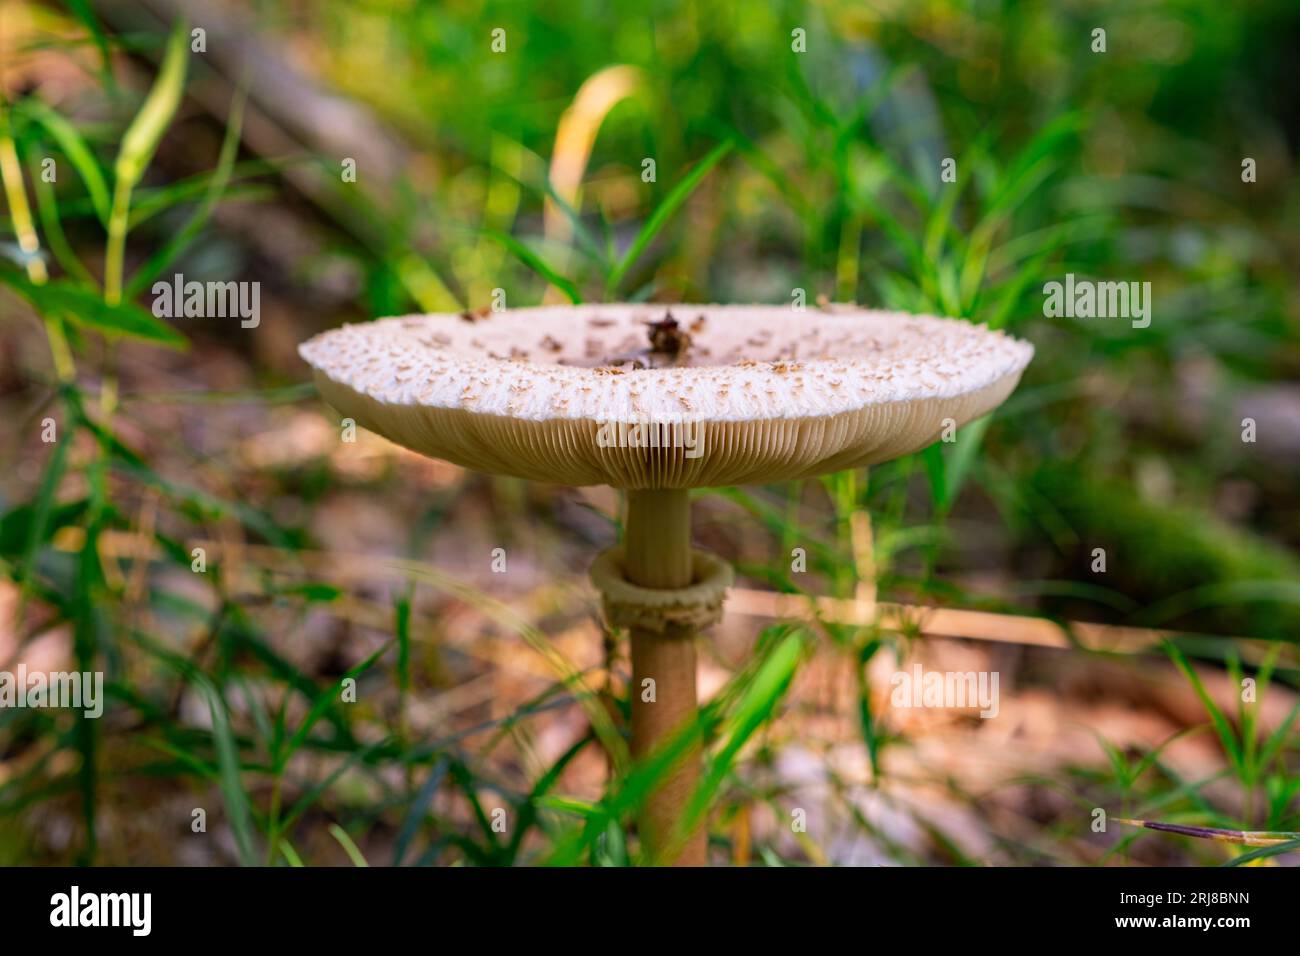 Beautiful lamellar mushroom Umbrella grow on a rotten fallen tree overgrown with moss in the forest. Beautiful photo of wild mushroom Macrolepiota pro Stock Photo